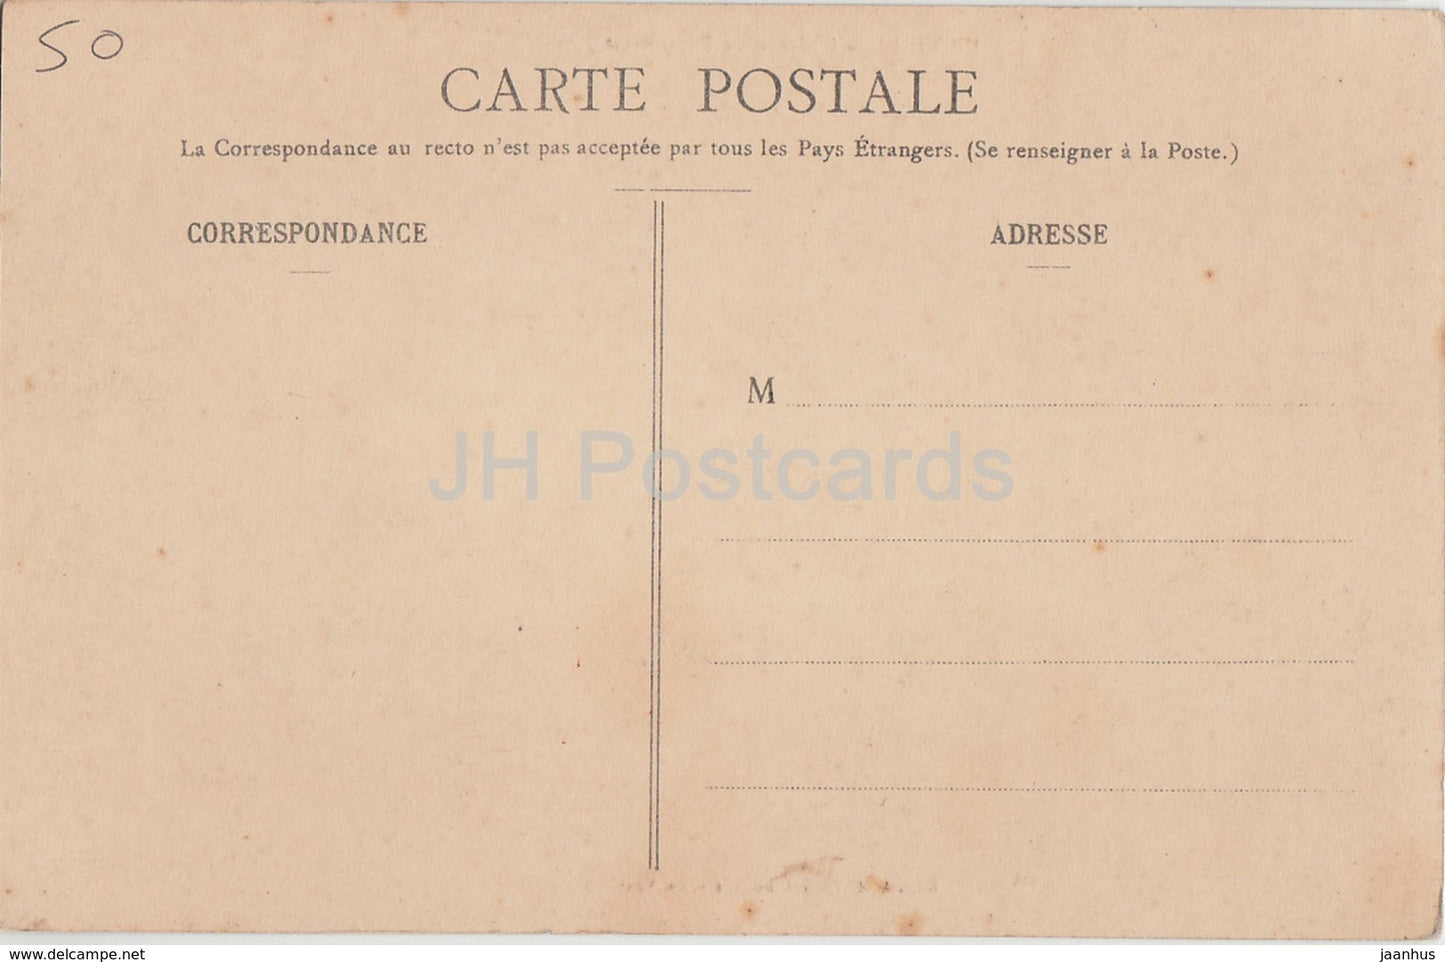 Le Vicel - Chateau de Pepinvast - Schloss - alte Postkarte - Frankreich - unbenutzt